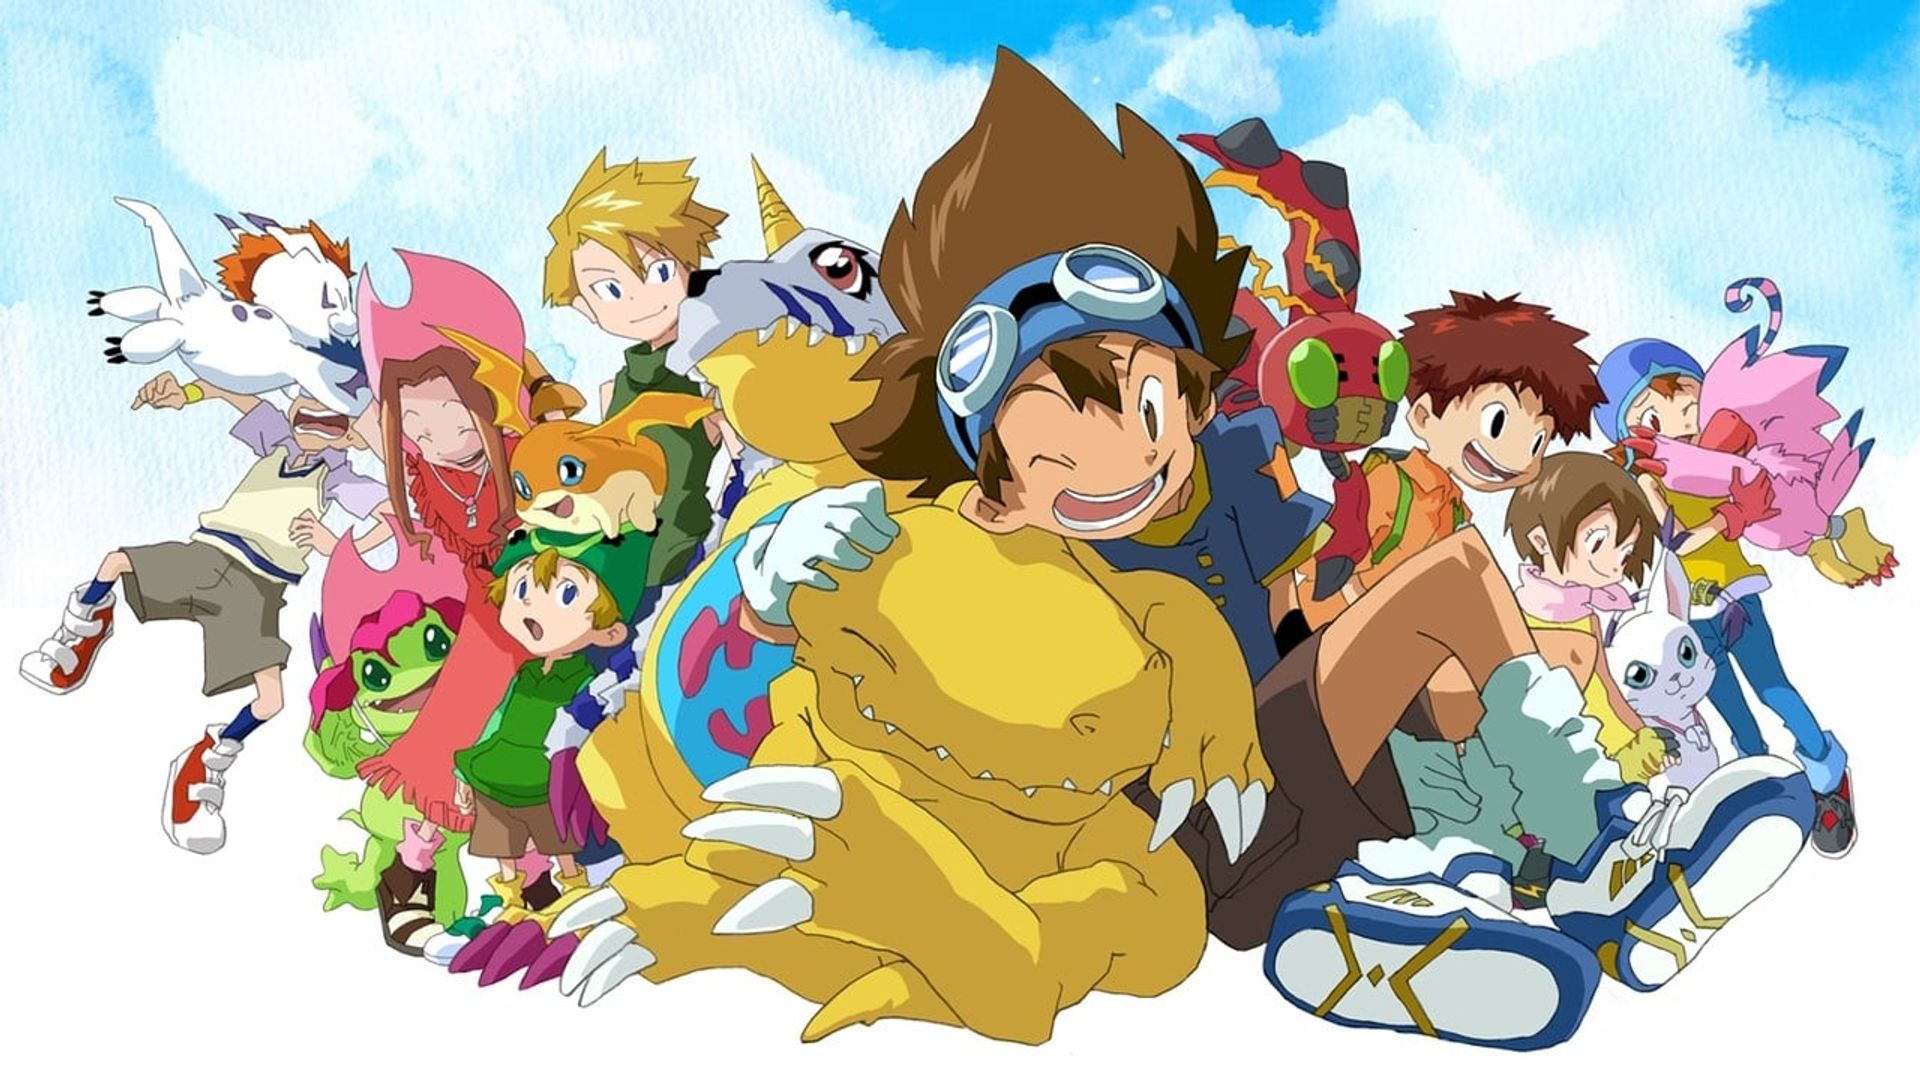 Digimon Adventure Tri - streaming tv show online